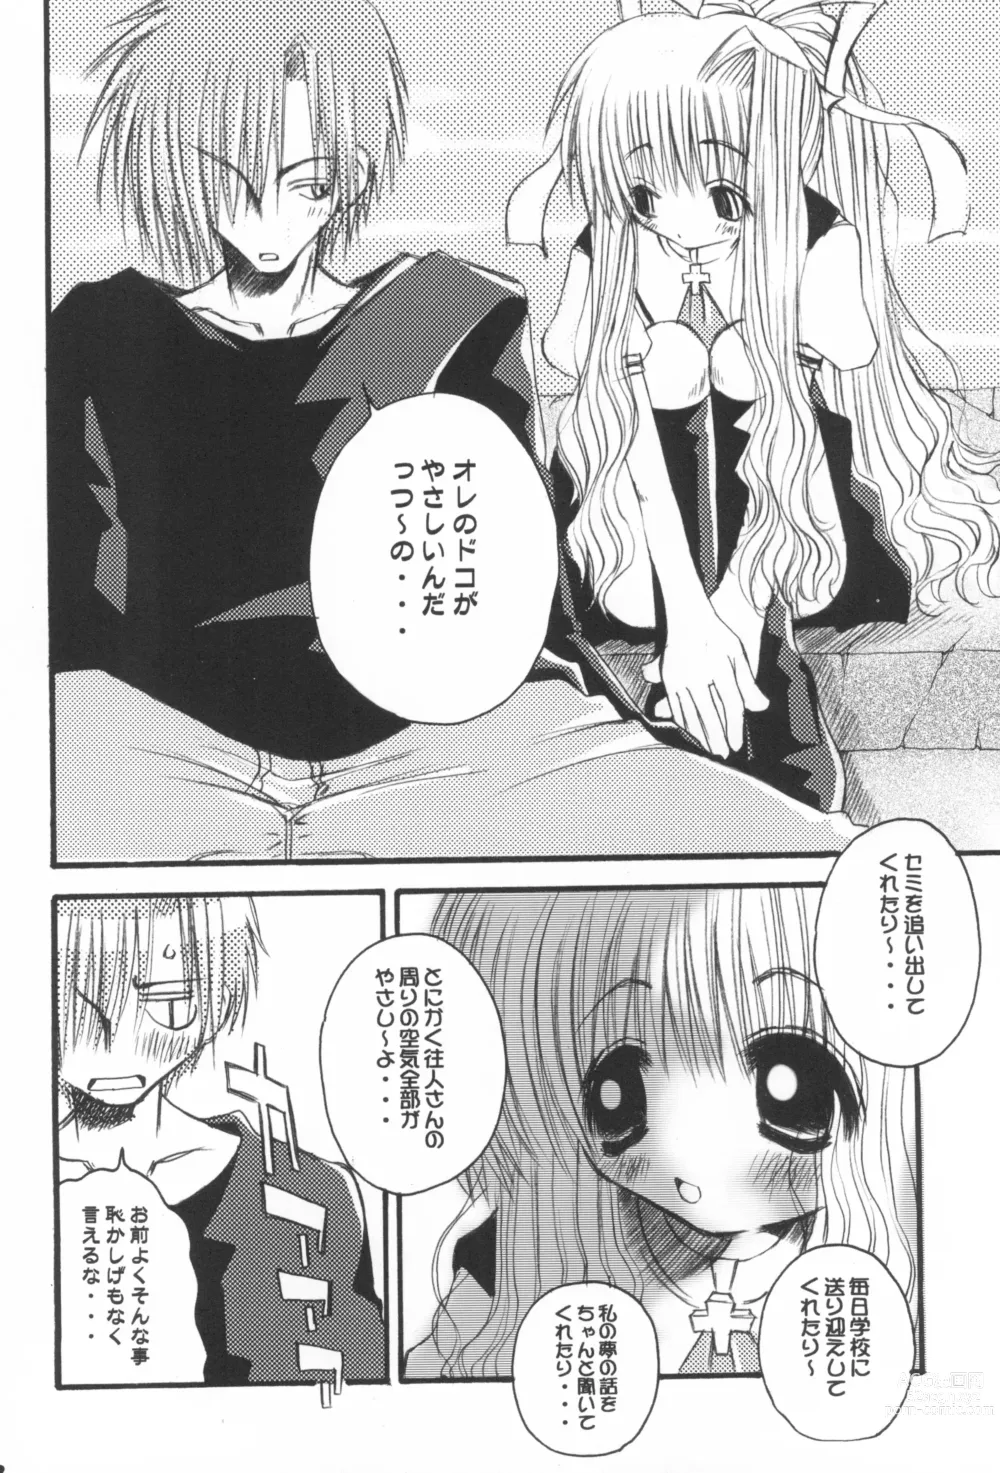 Page 27 of doujinshi Pinkey Hearts